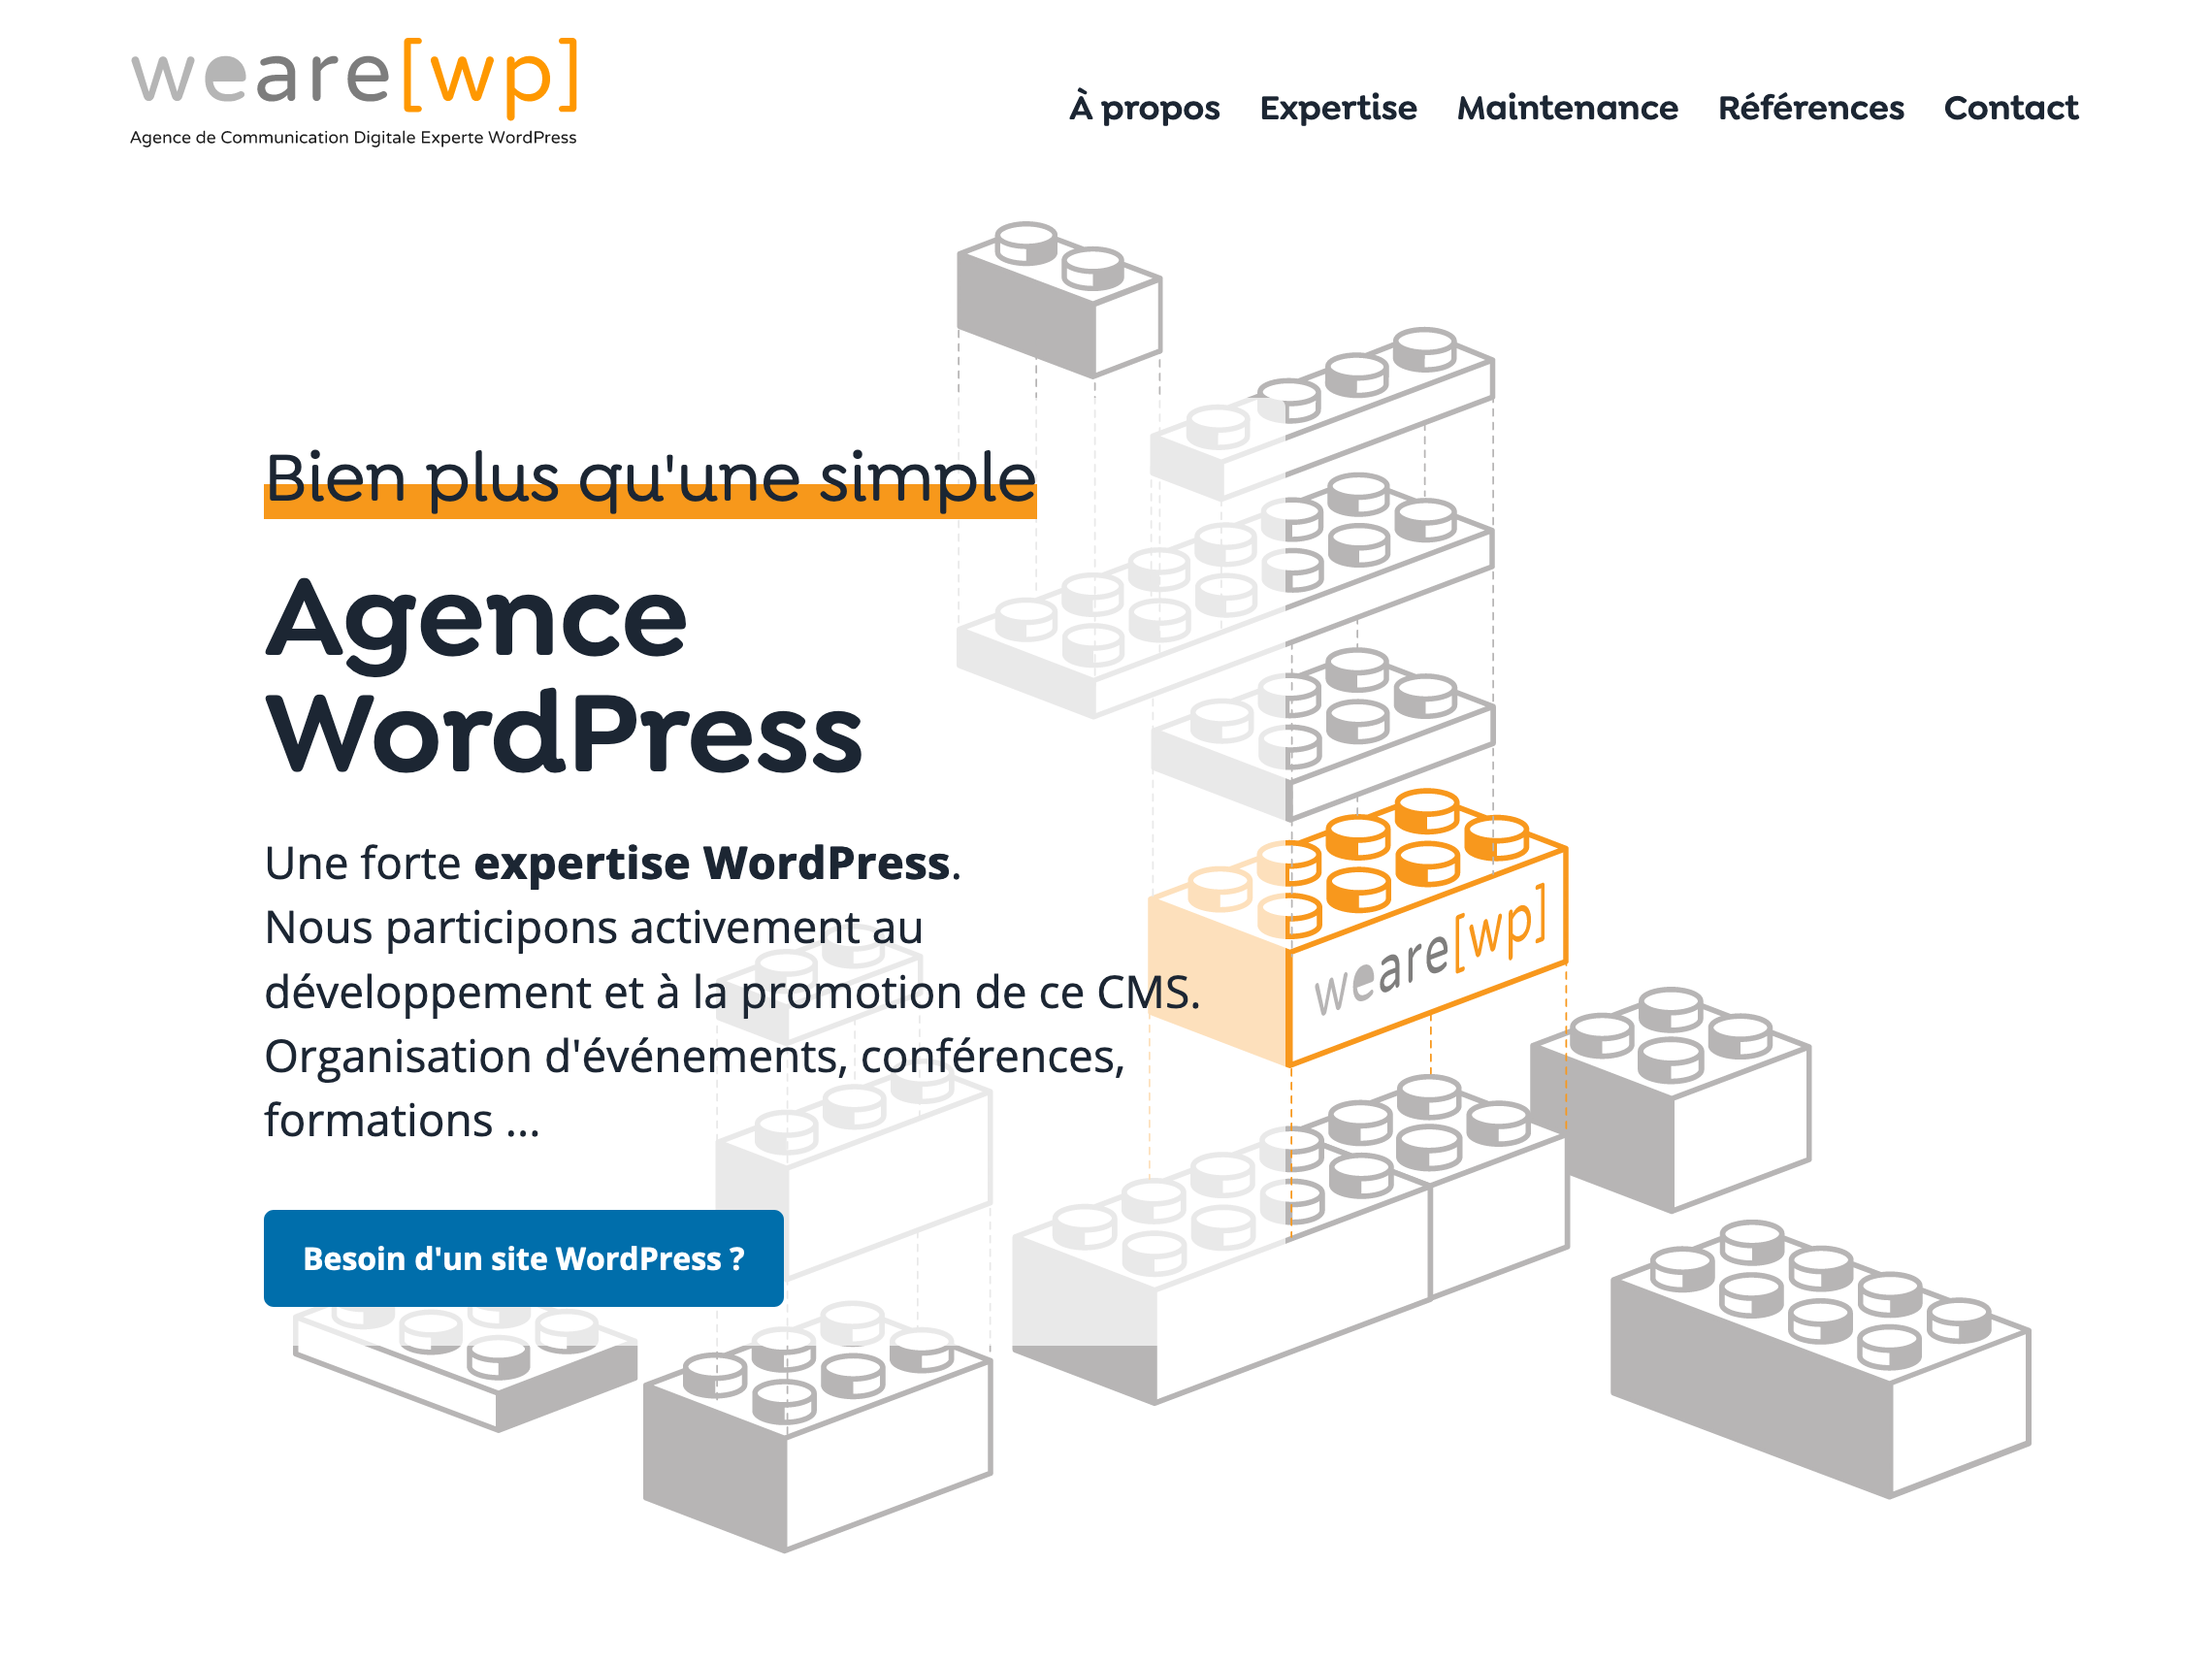 WeareWP est une agence WordPress pionnière.